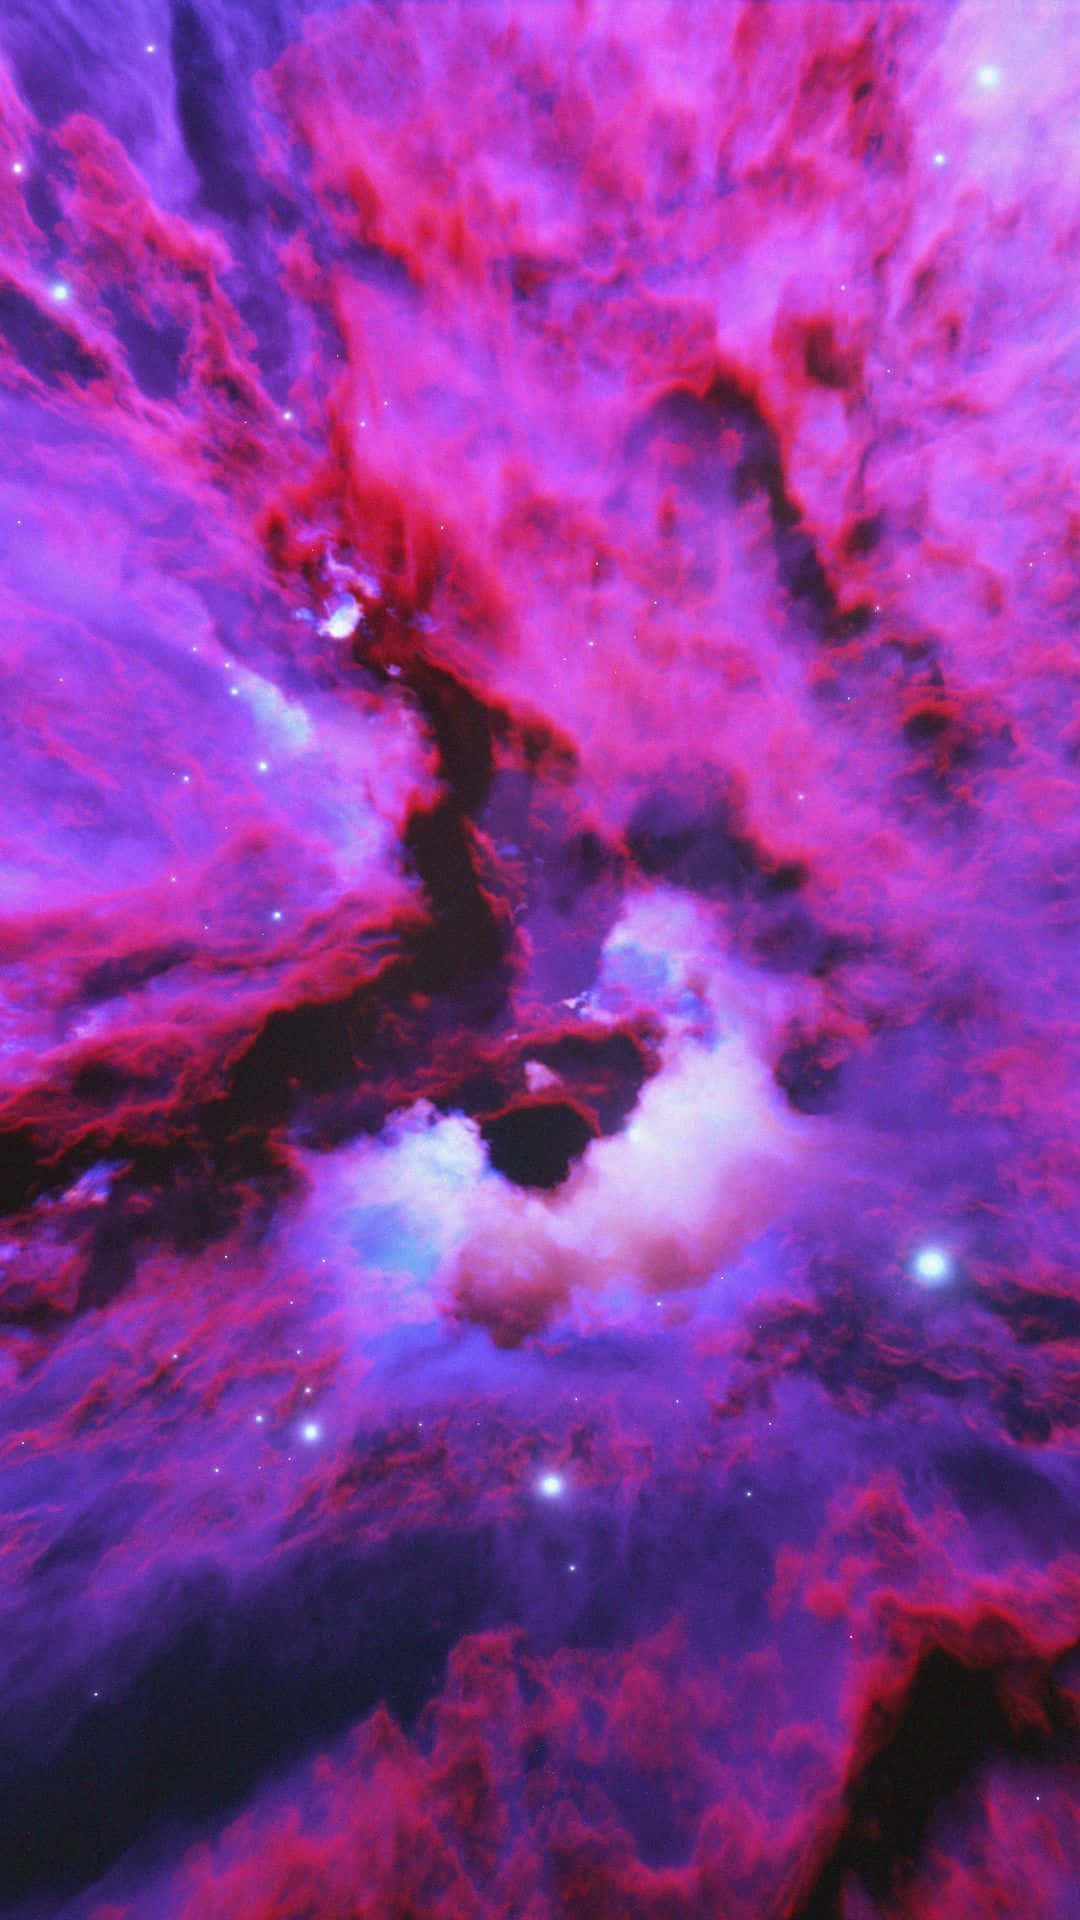 A view of a colorful nebula